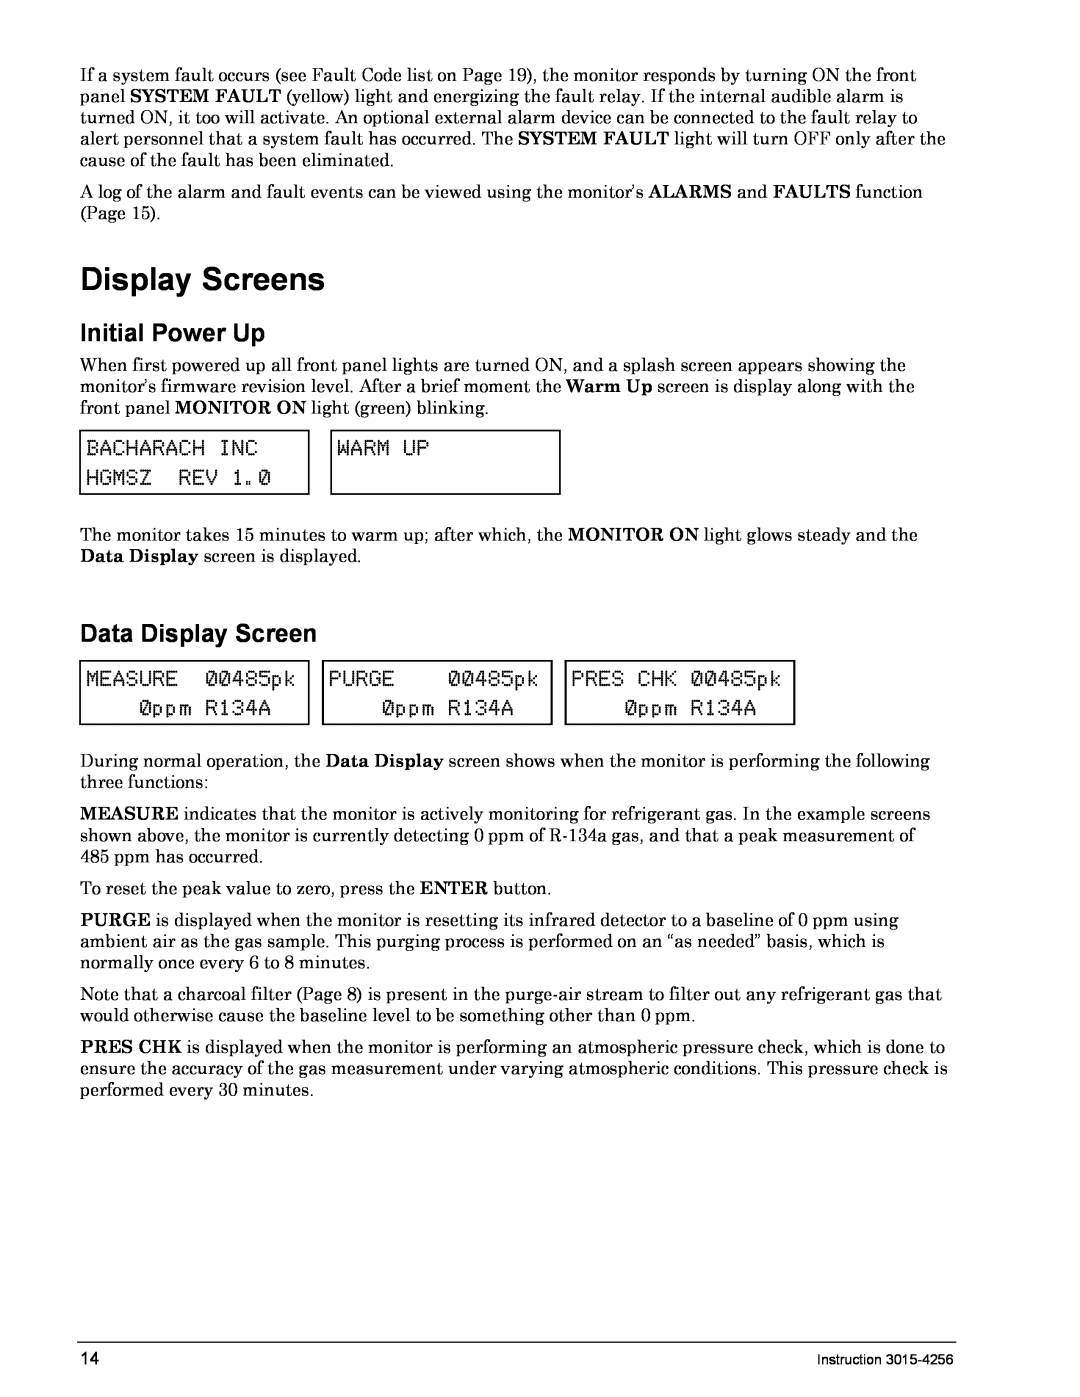 Bacharach 3015-4256 manual Display Screens, Initial Power Up, Data Display Screen 